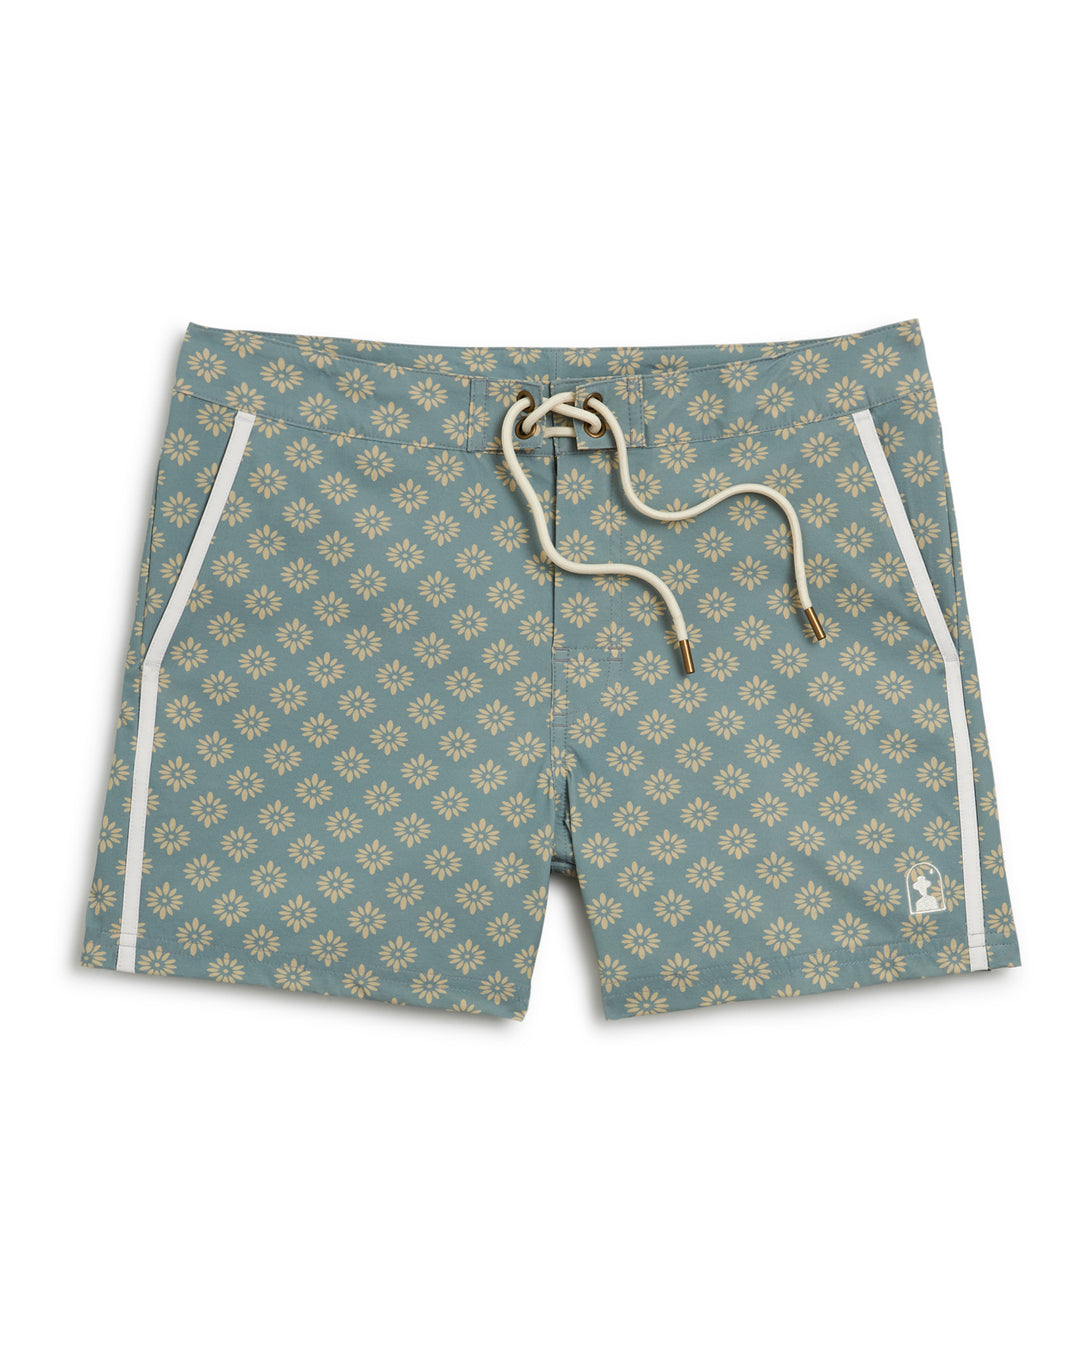 These Dandy Del Mar Stirata Swim Shorts - Abalone feature a blue and white polka dot design.